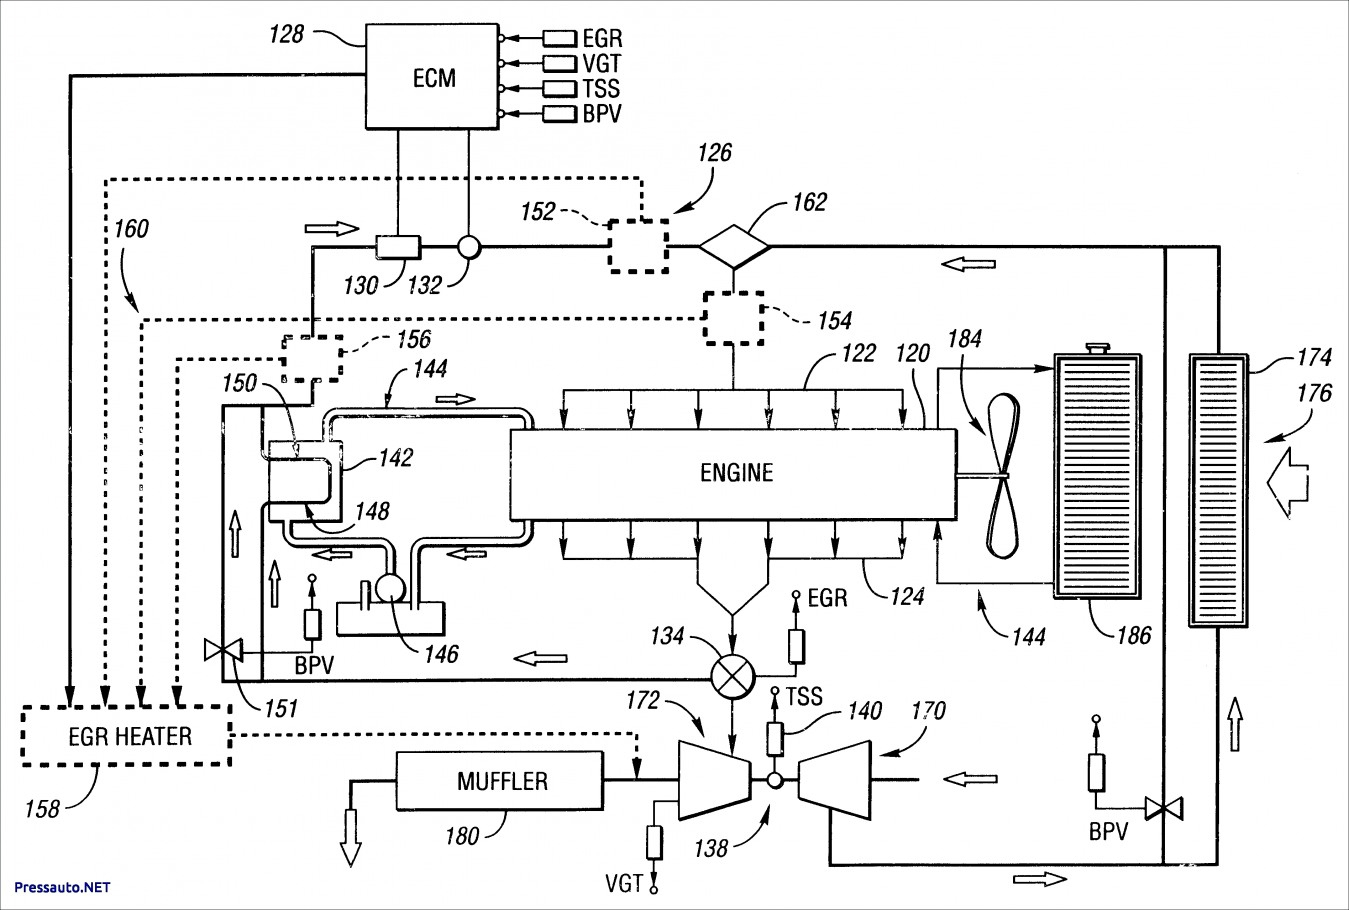 Honda Gx390 Electrical Schematic - Wiring Diagram Explained - Honda Gx390 Wiring Diagram